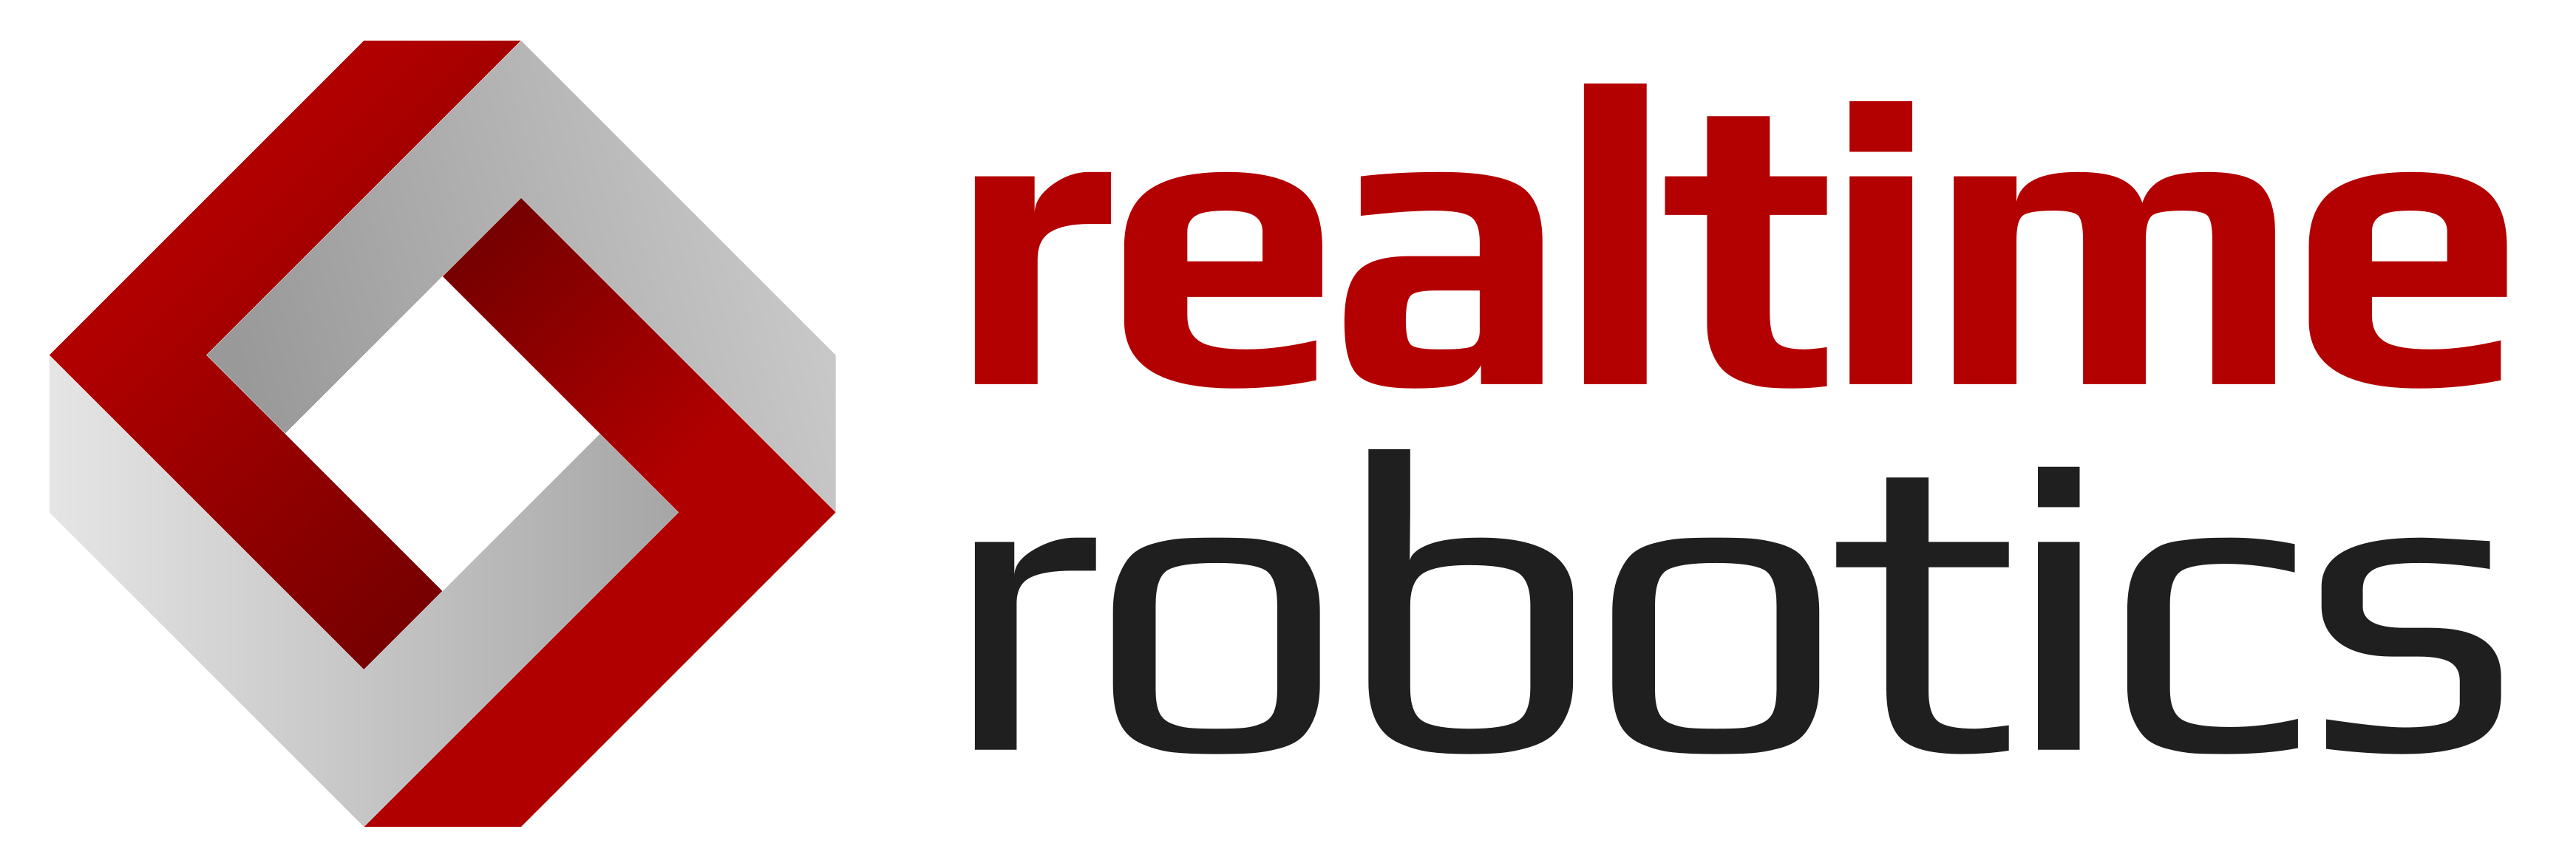 realtime robotics logo